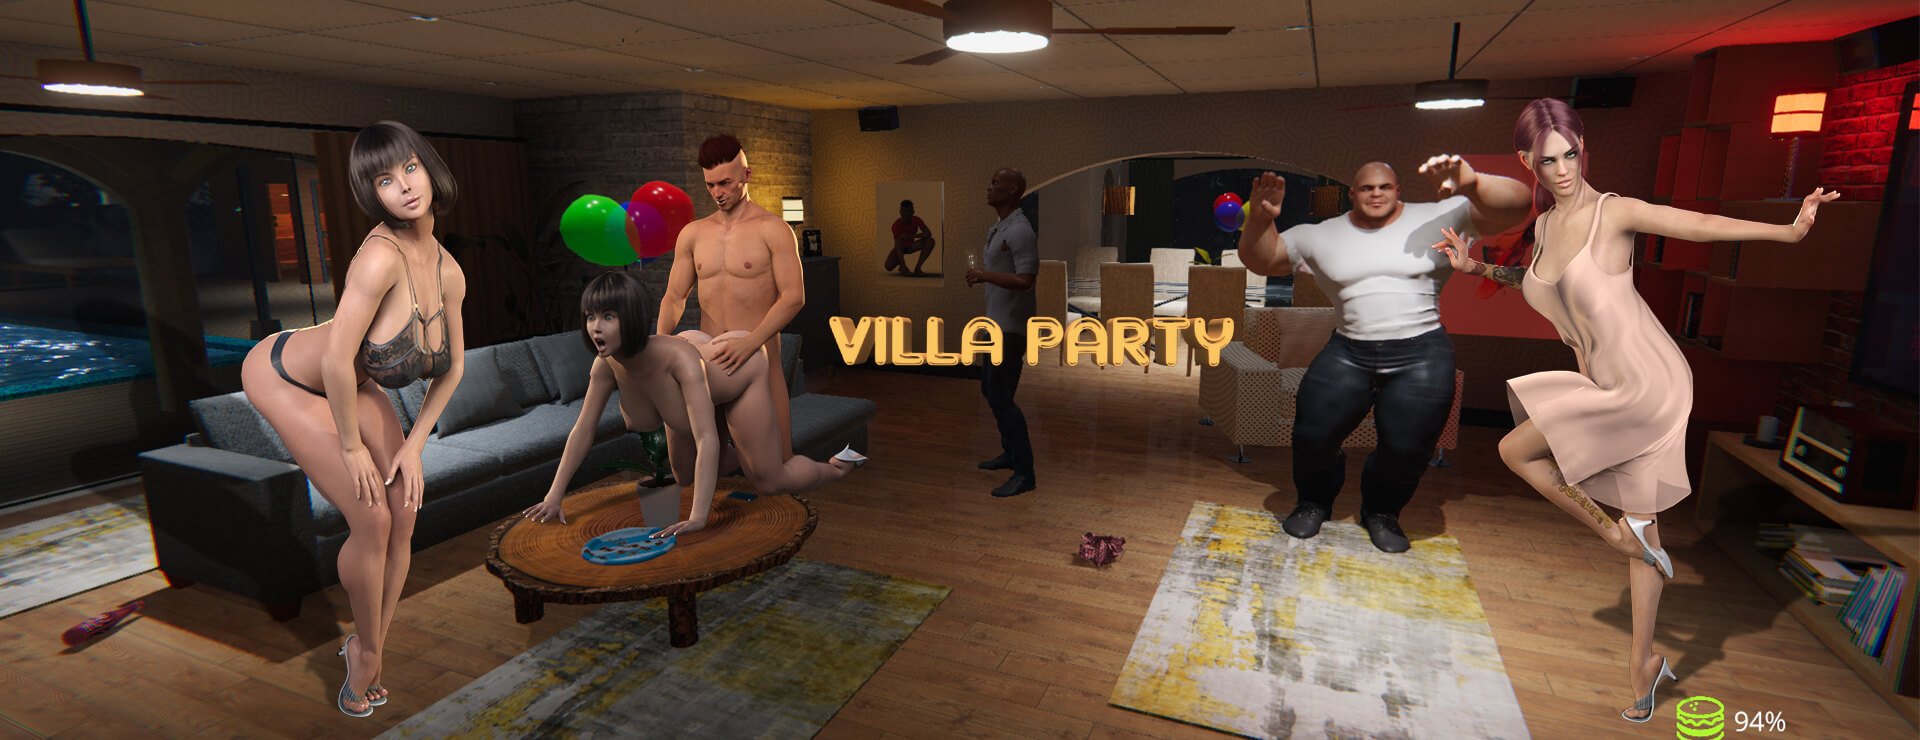 Villa Party I - Action Adventure Game